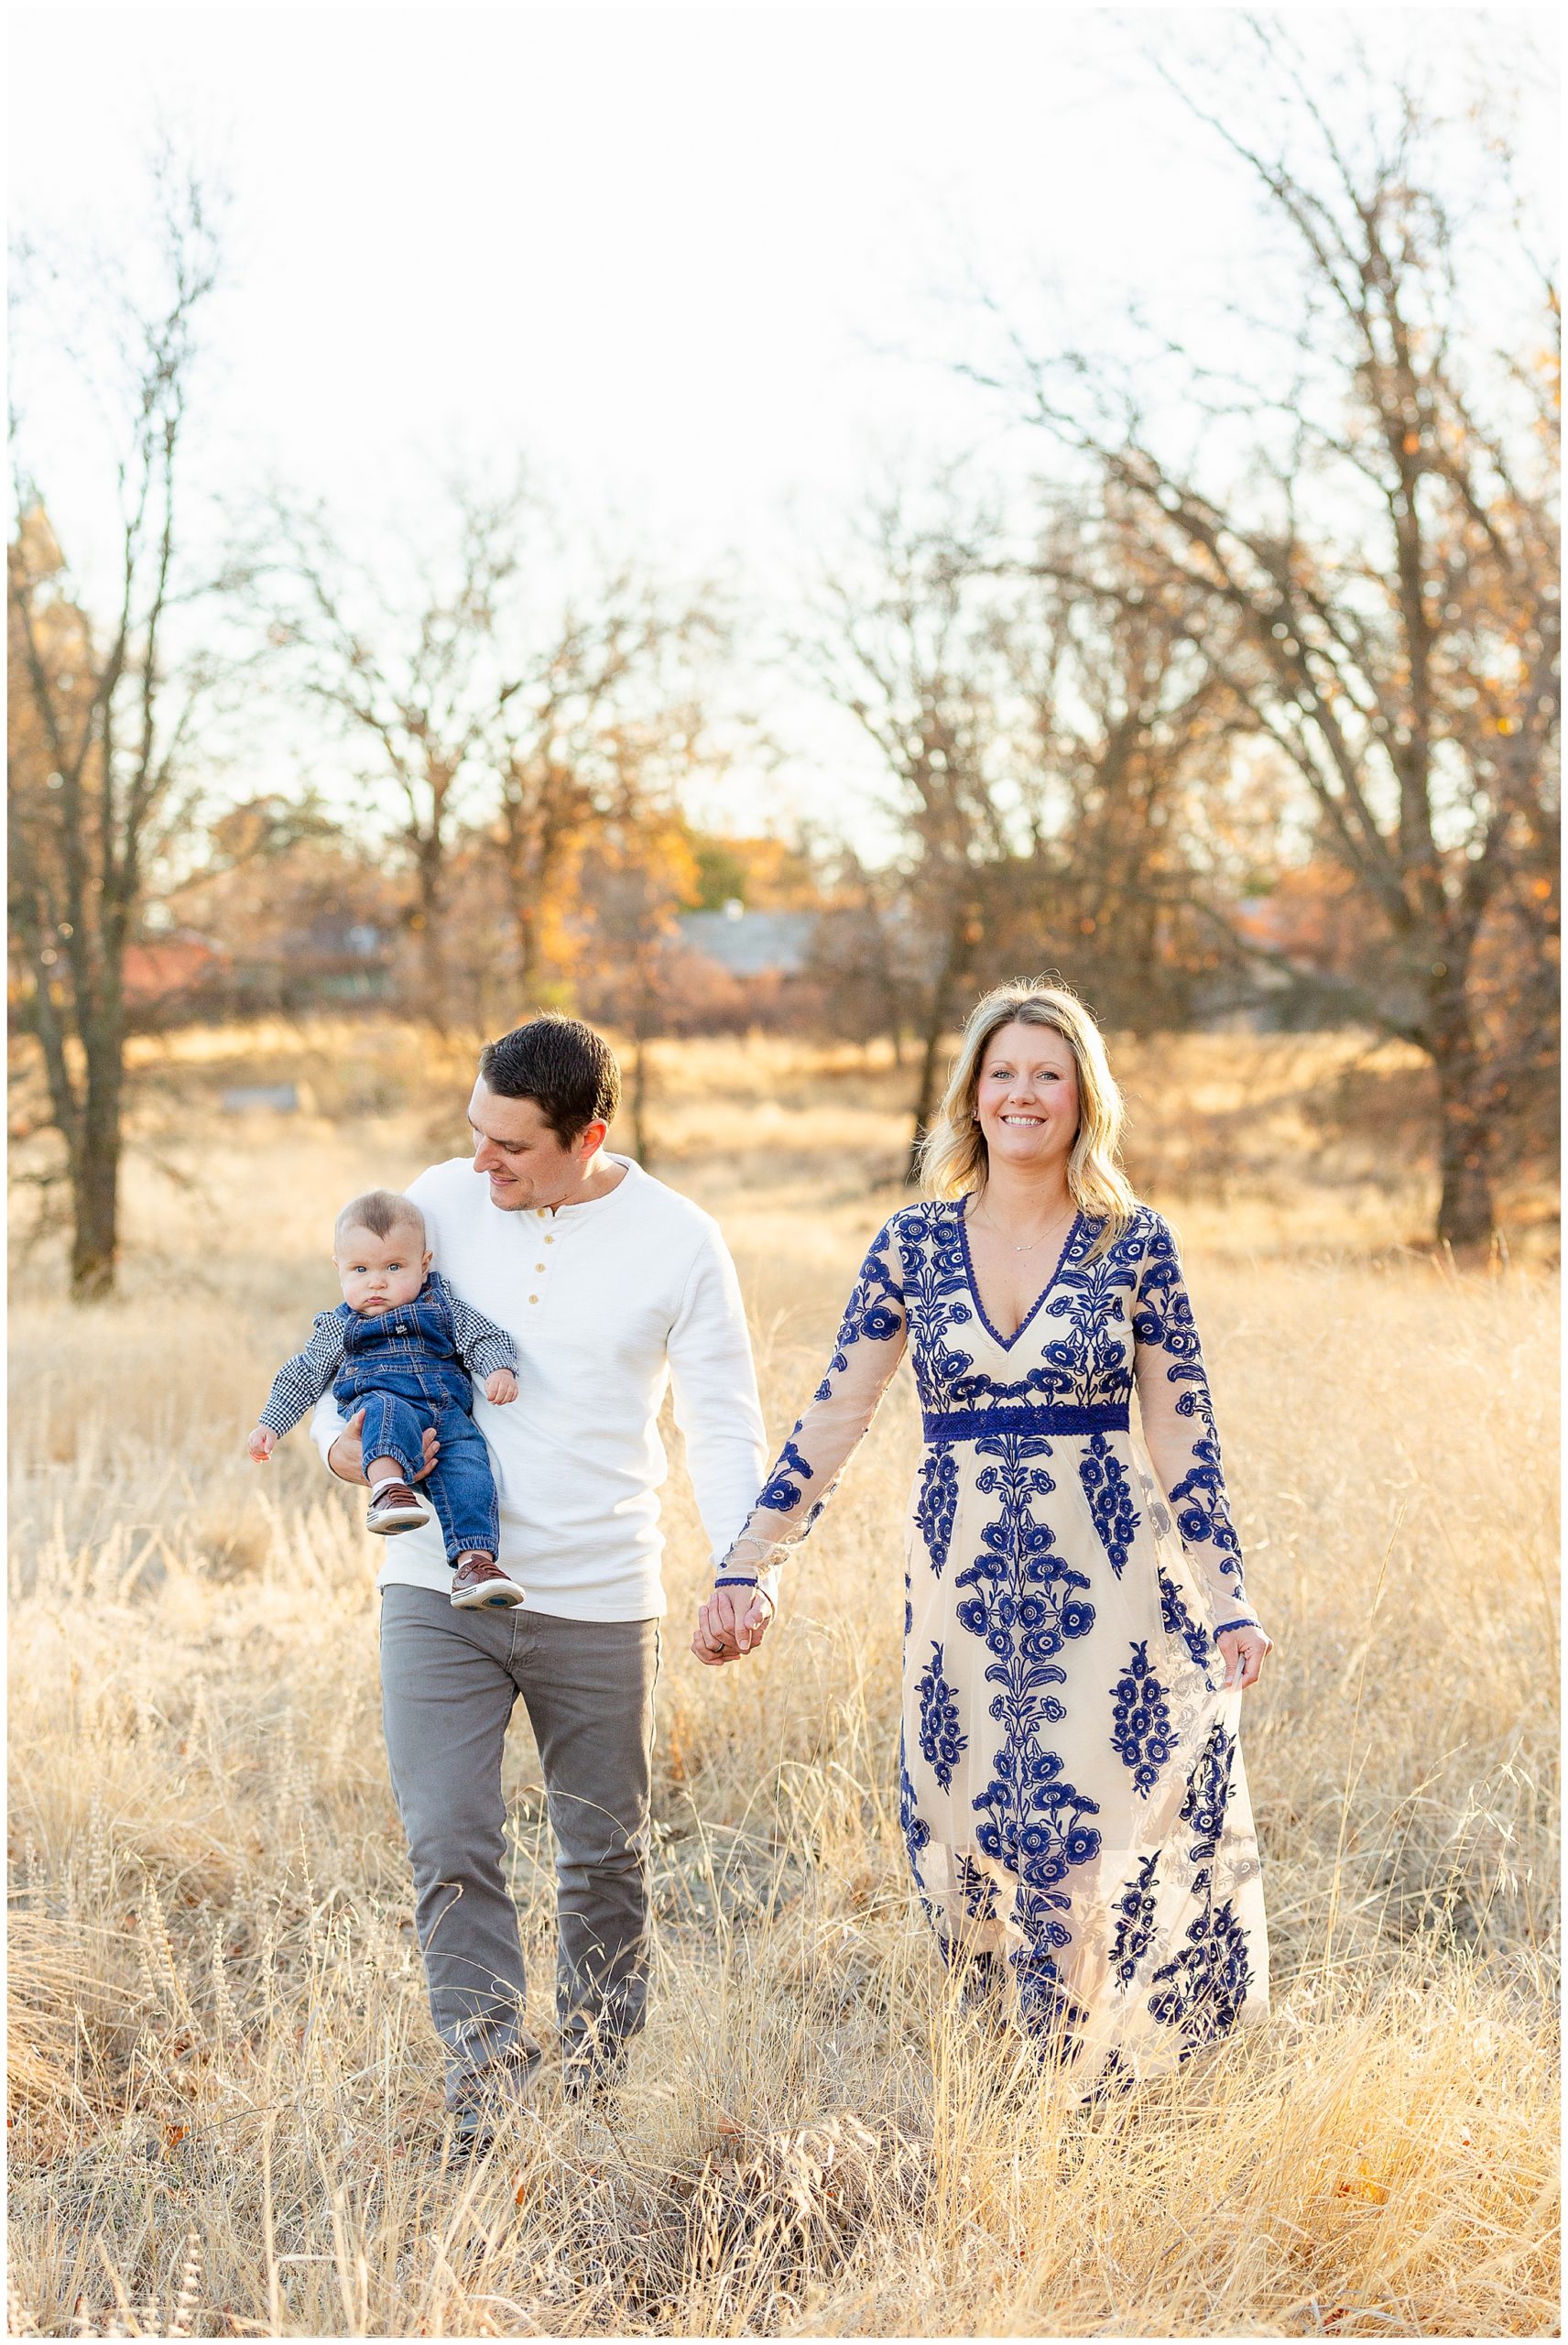 Winter Family Session Walking in Grass Field in Blue Applique Dress | Torrie + Glenn